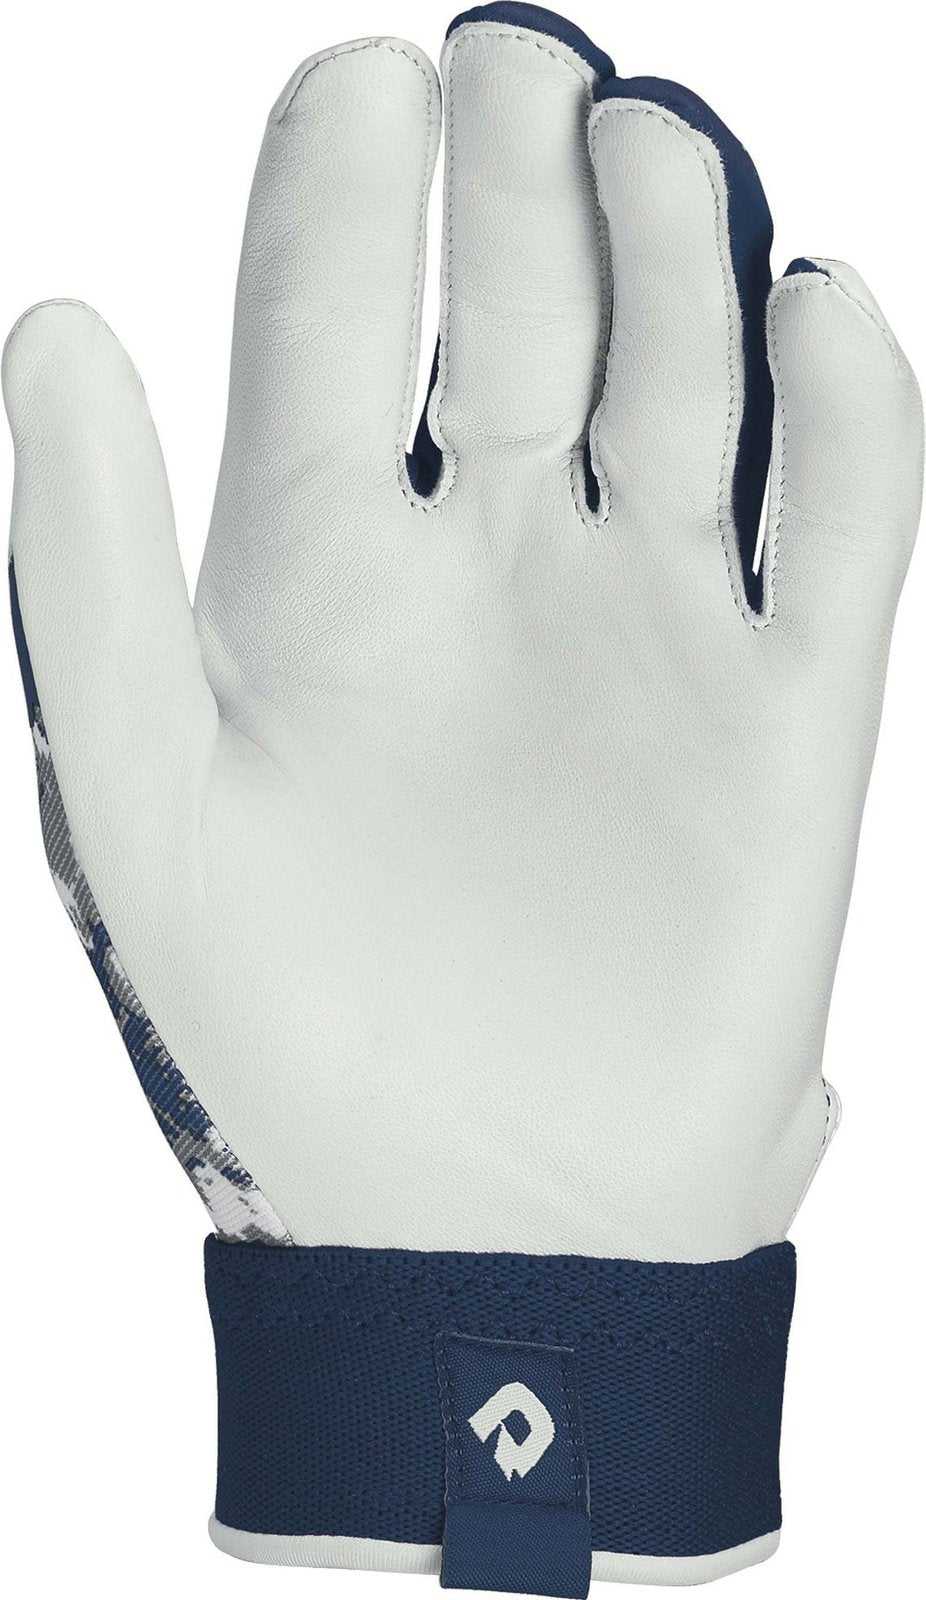 DeMarini Digi Camo II Adult Batting Gloves - Optic Camo - HIT A Double